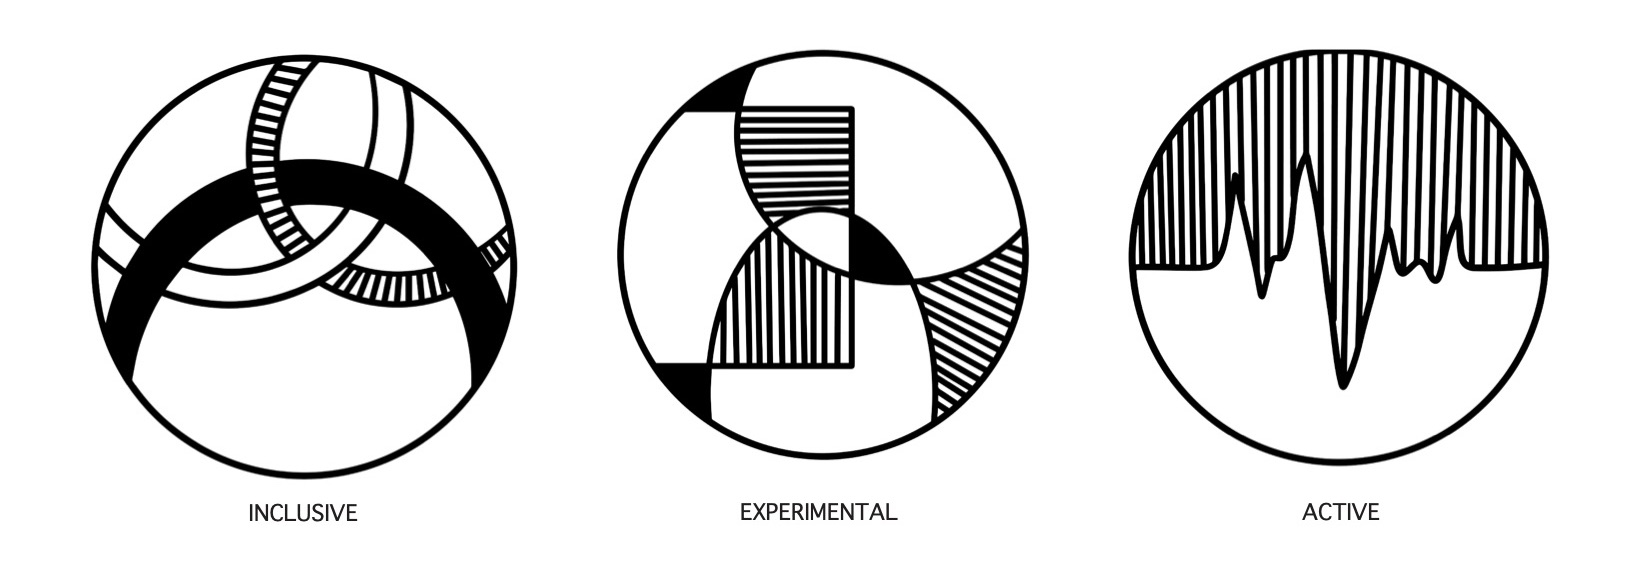 Three circles to represent inclusive, experimental, active. Decorative image.